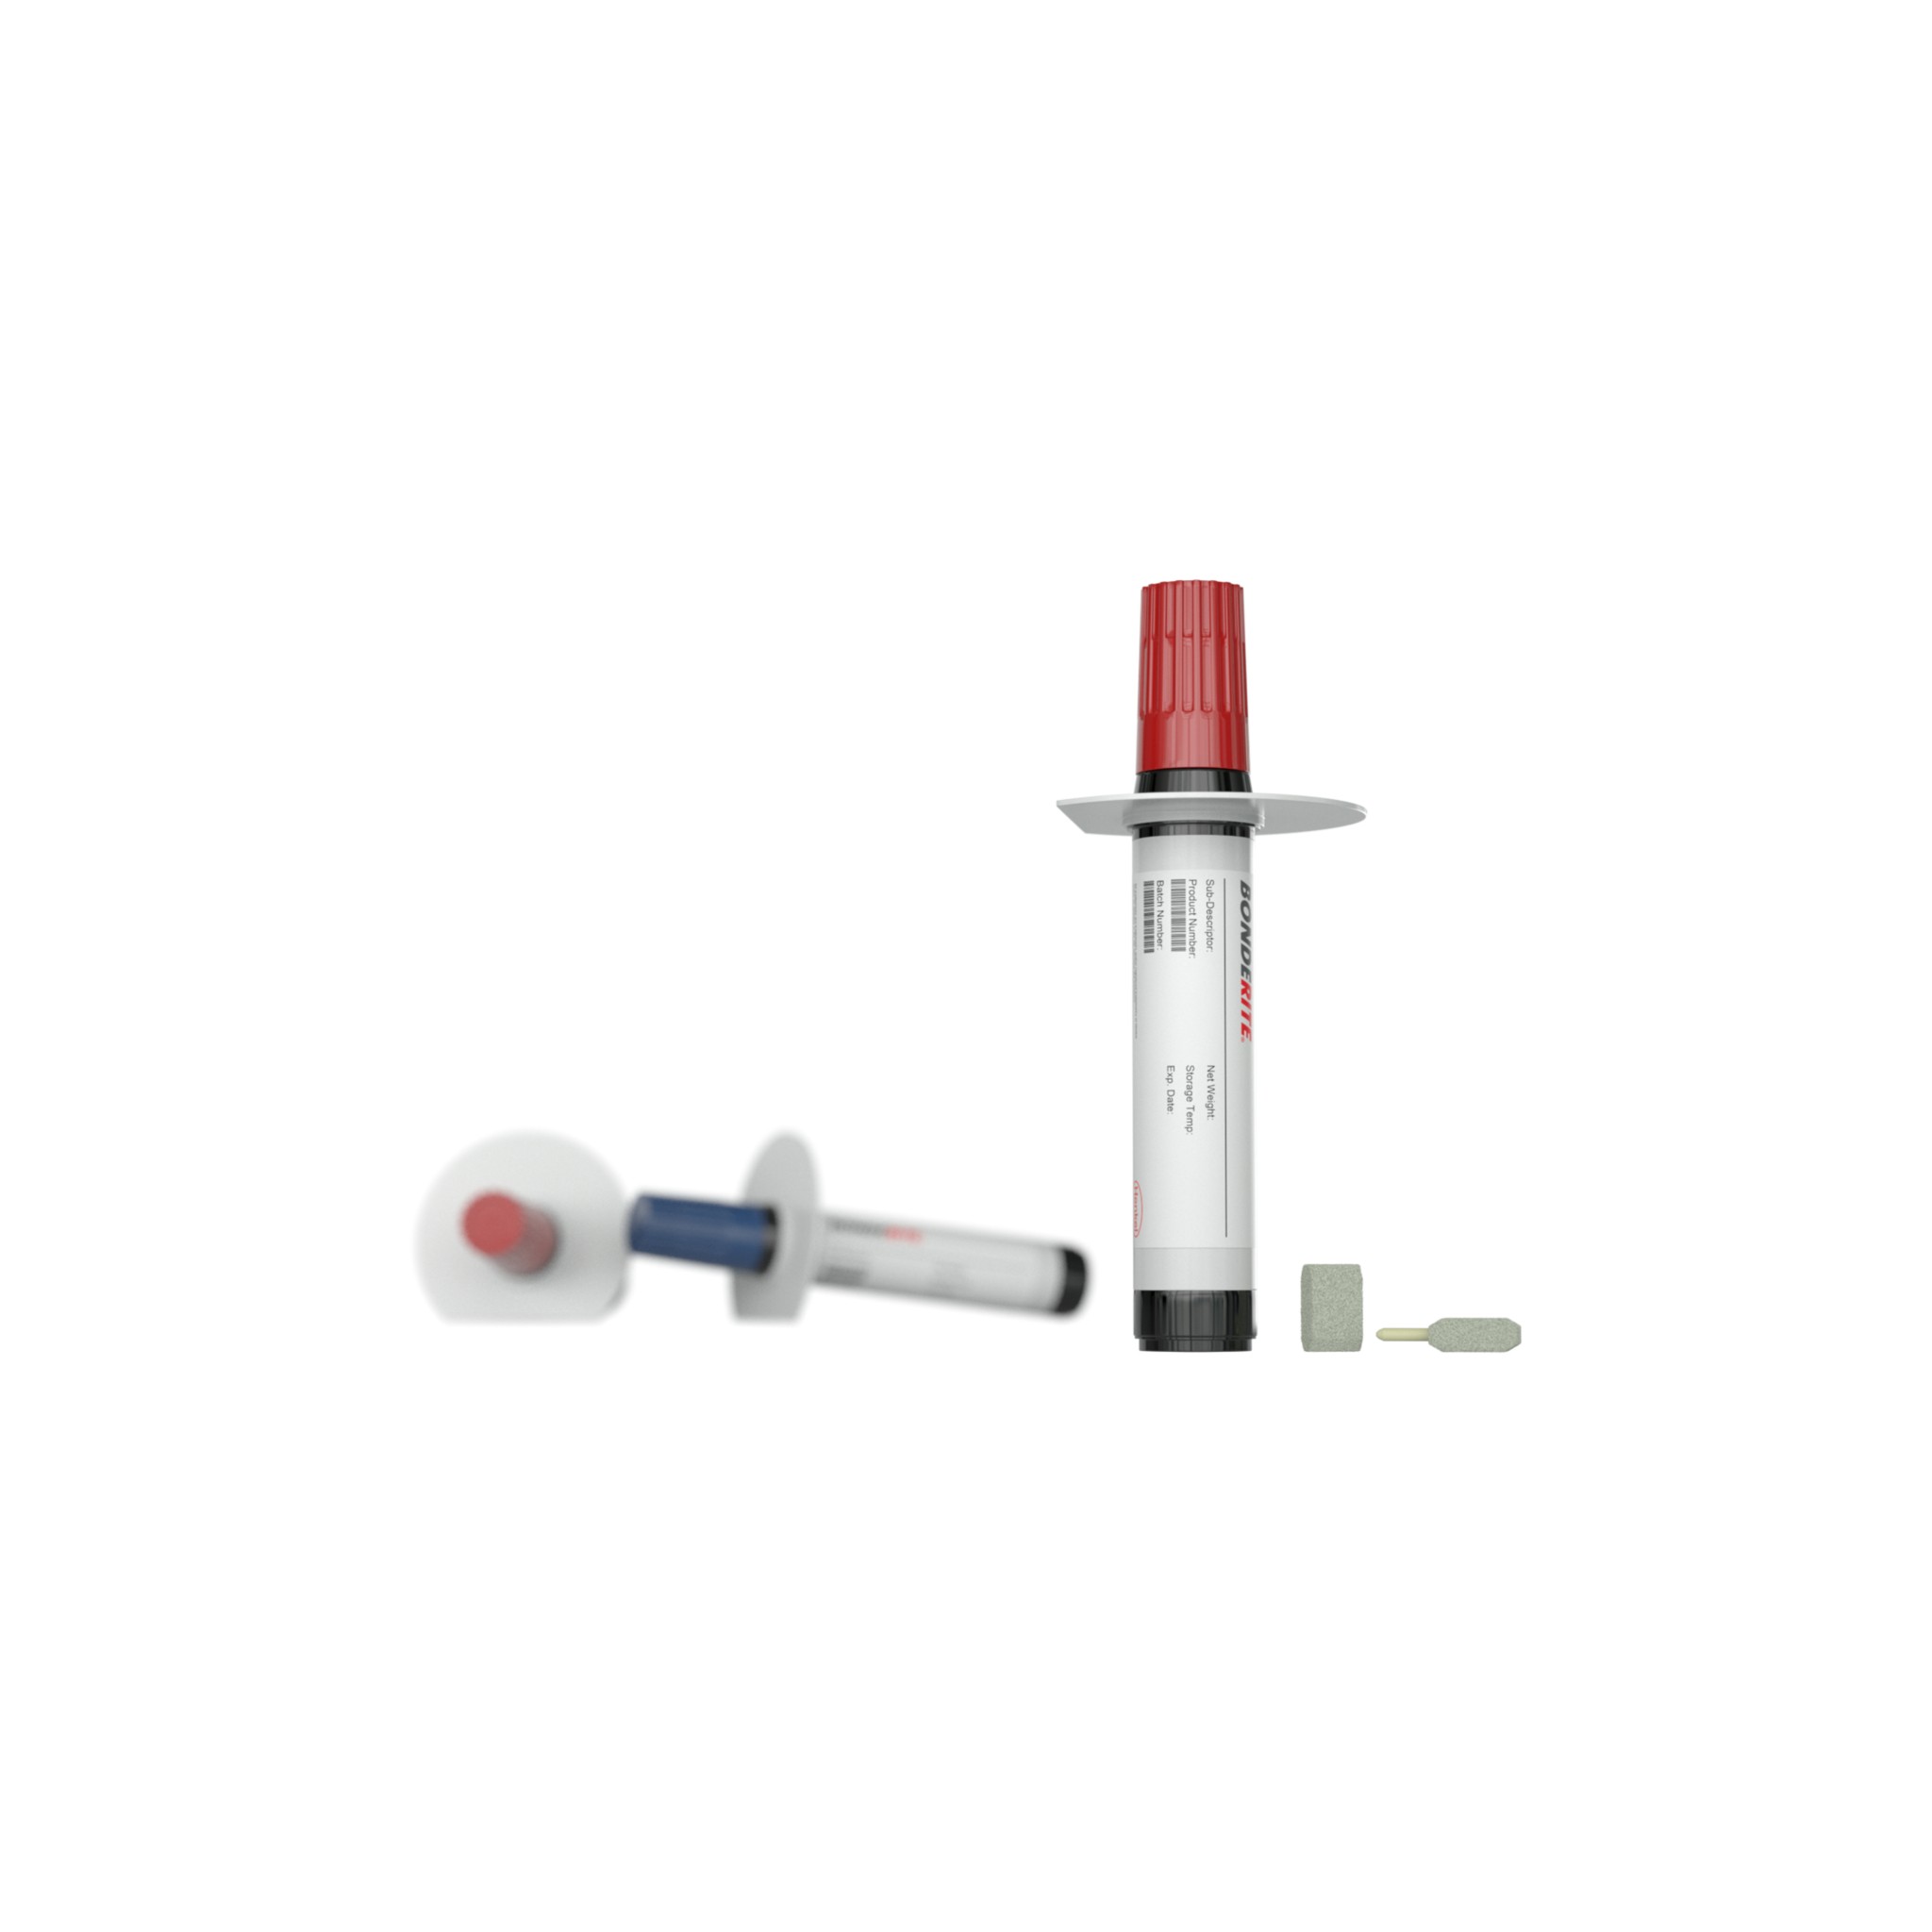 BONDERITE M-CR 1132 AERO - Metal pre-treatment - Henkel Adhesives